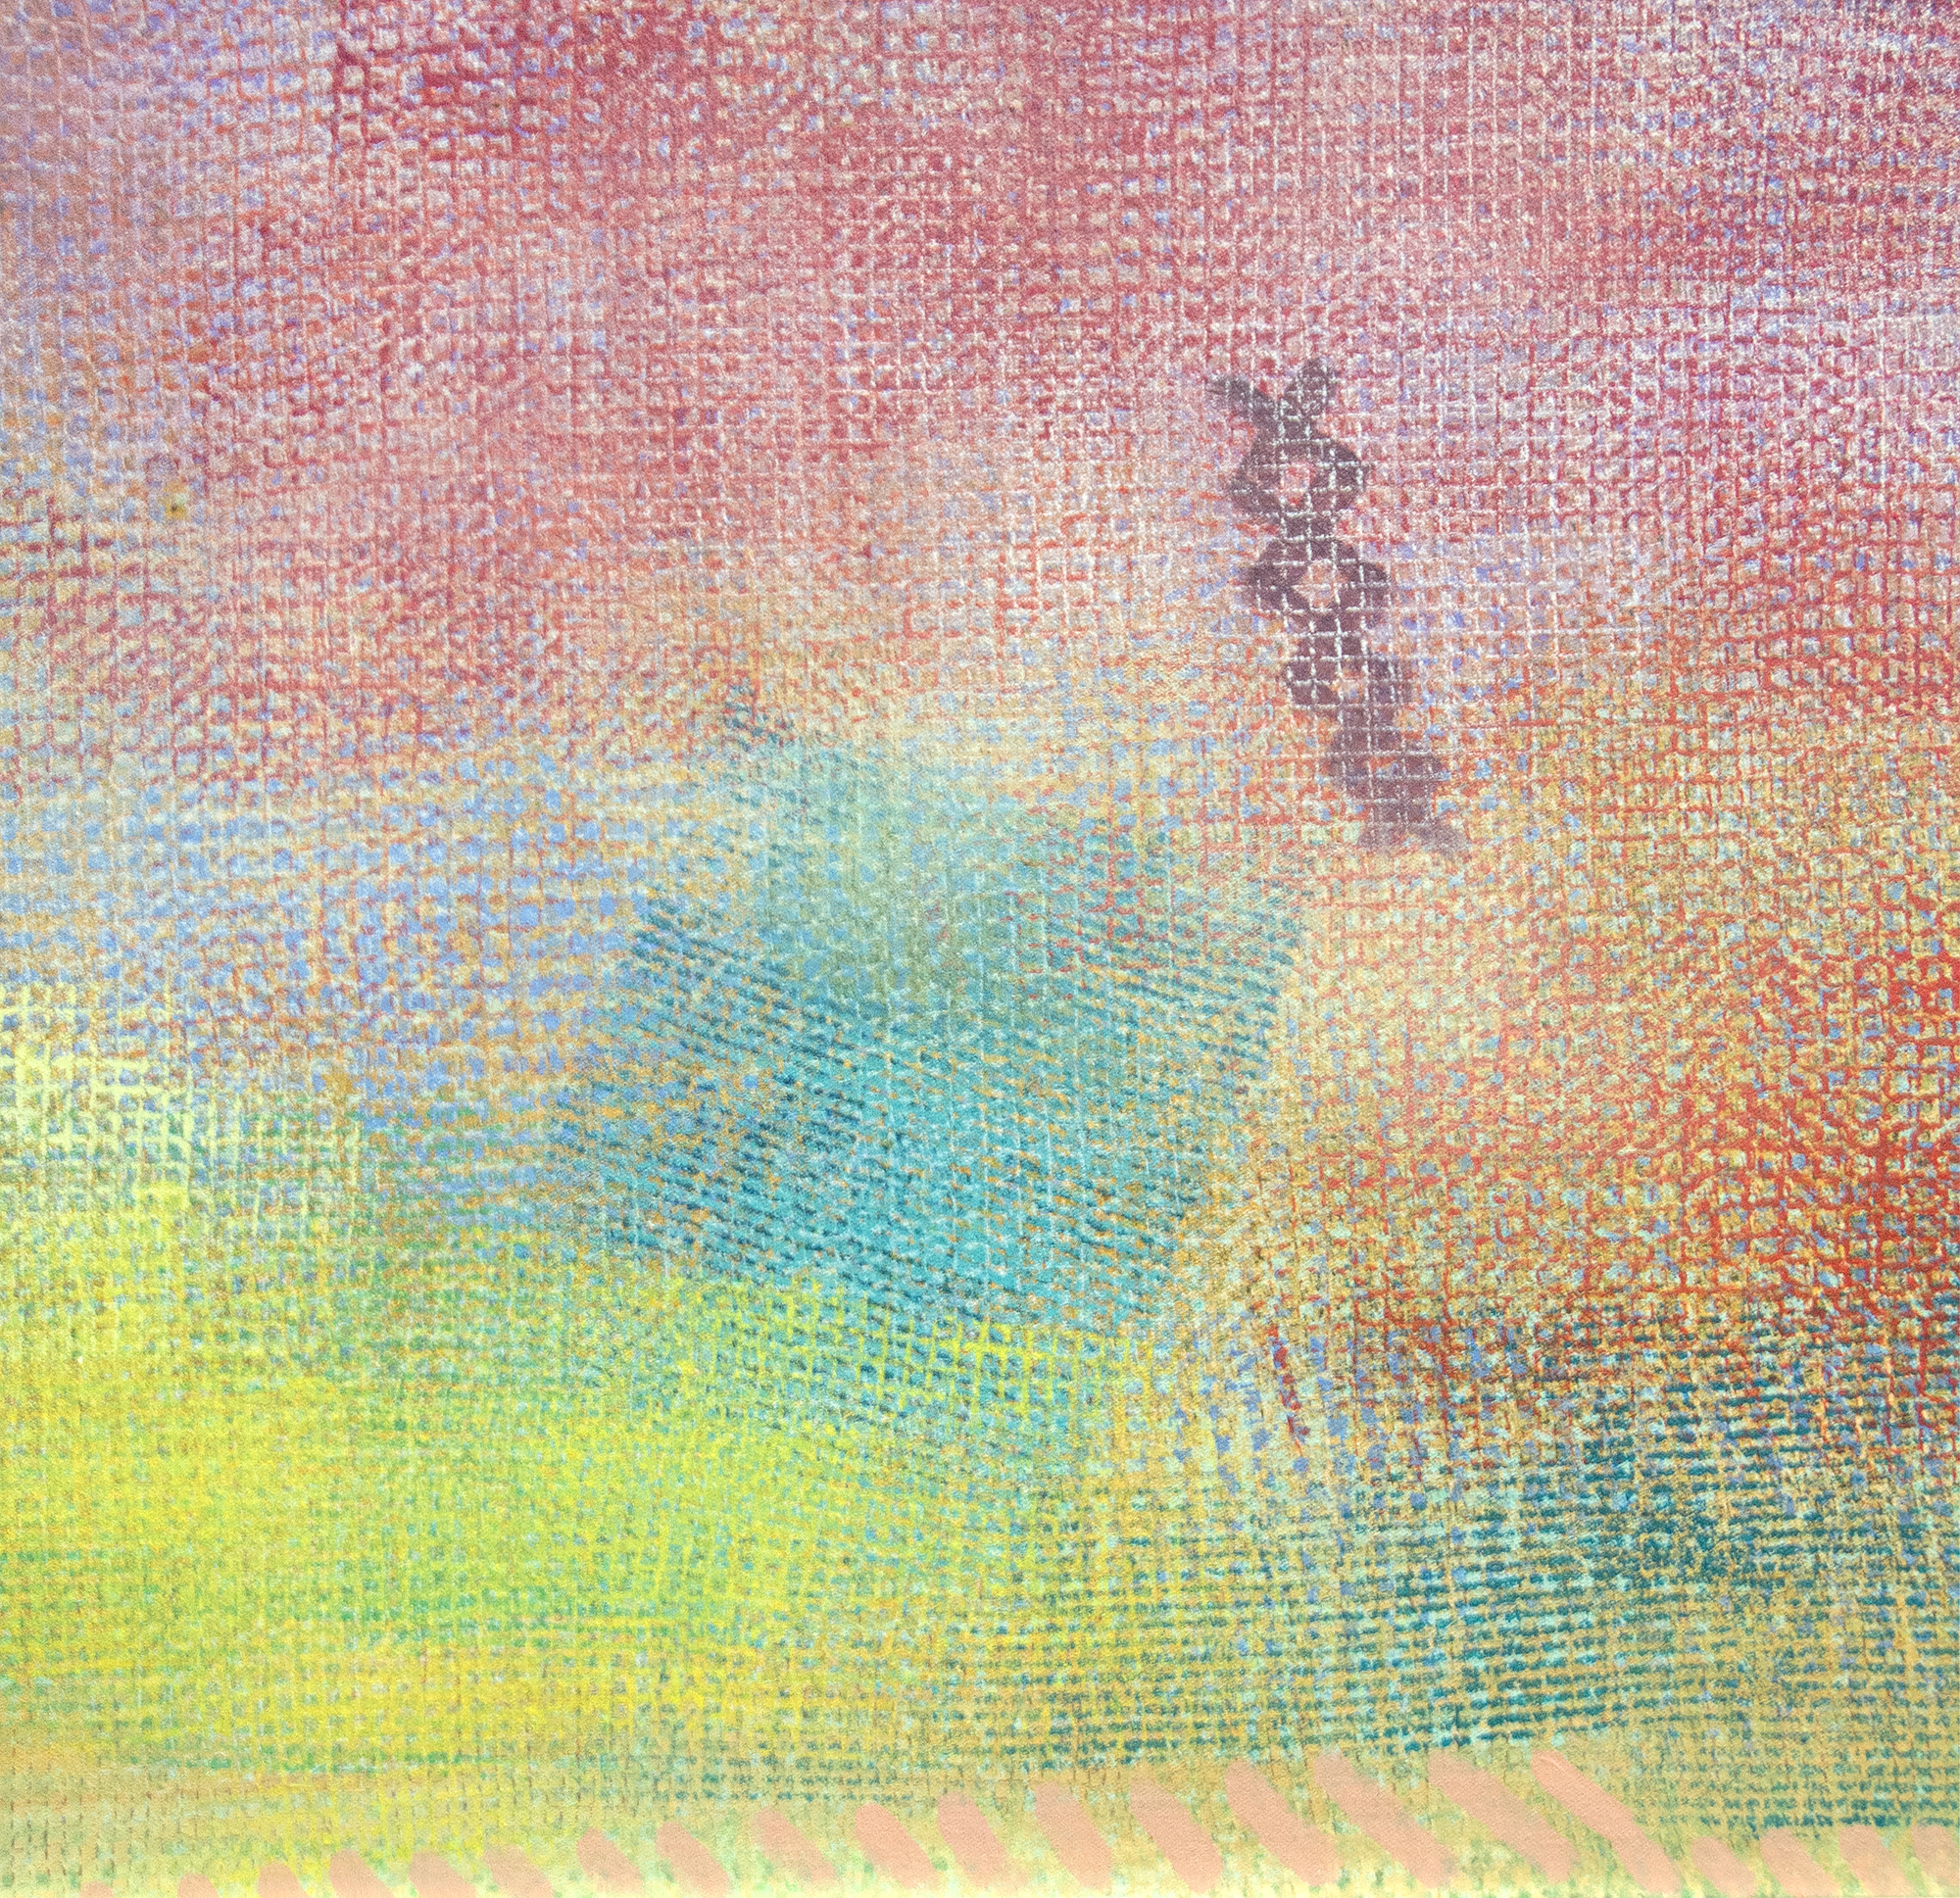 ROBERT NATKIN - Ohne Titel - Acryl auf Leinwand - 60 x 60 in.